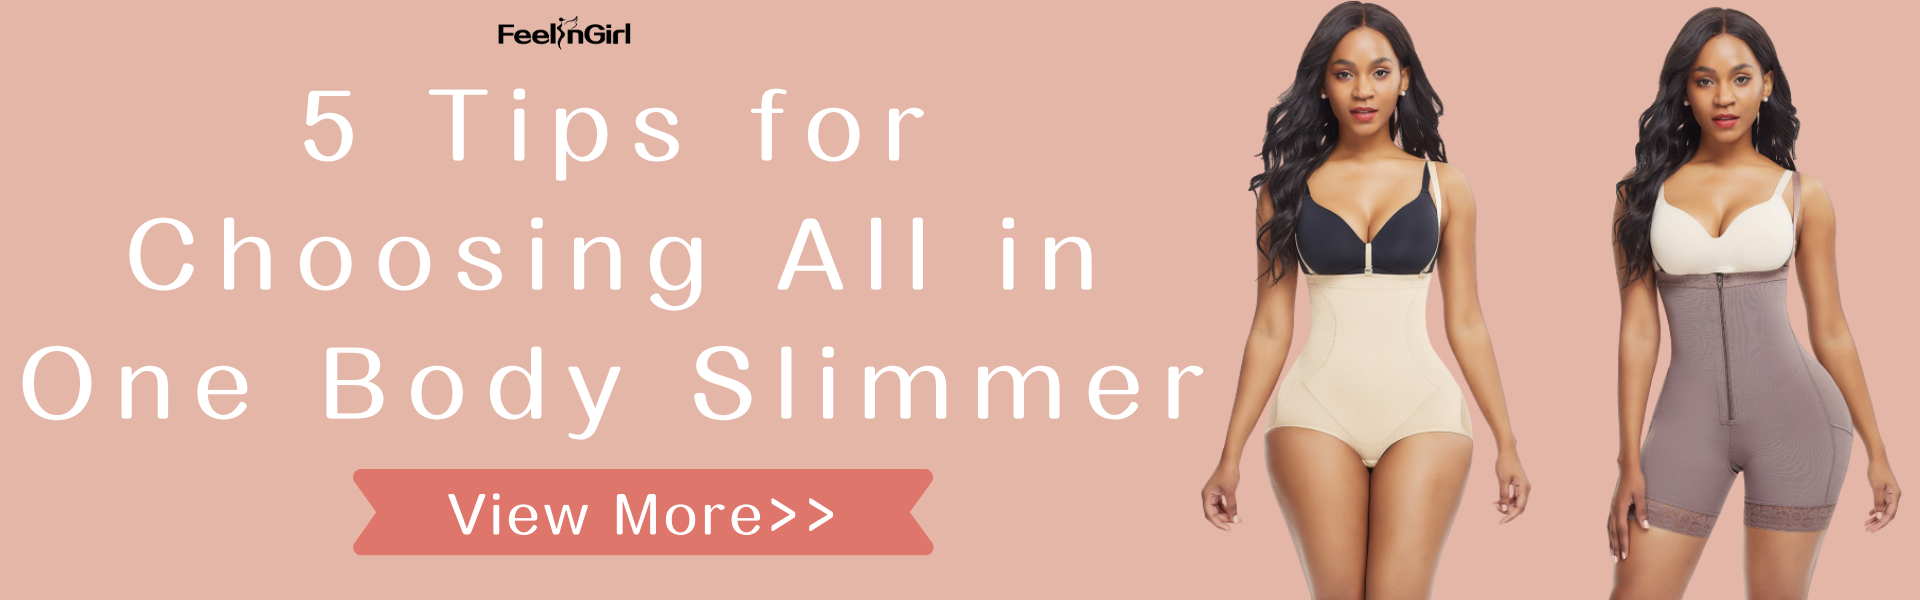 5 Tips for Choosing All in One Body Slimmer